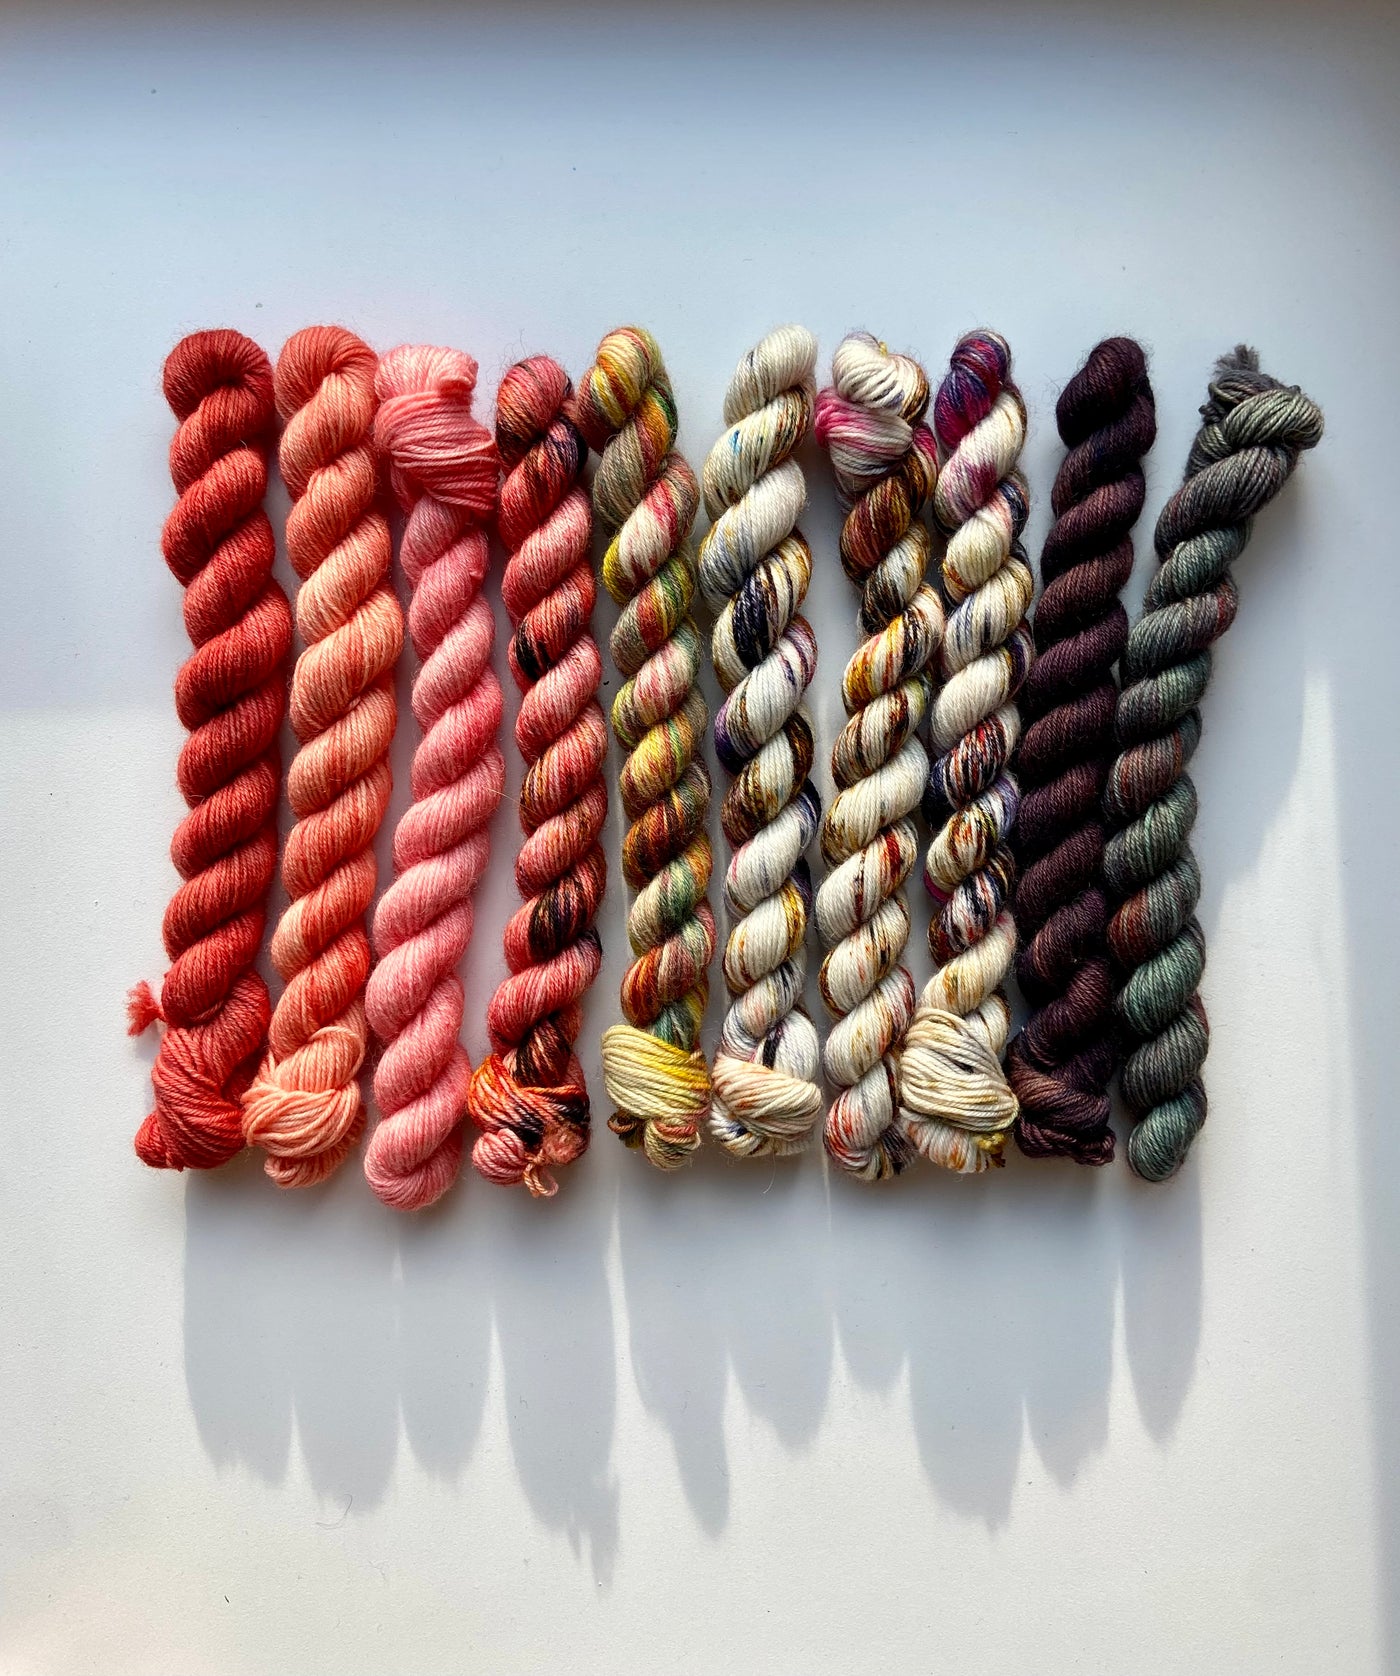 Wool Yarn - 20g and 50g Skeins